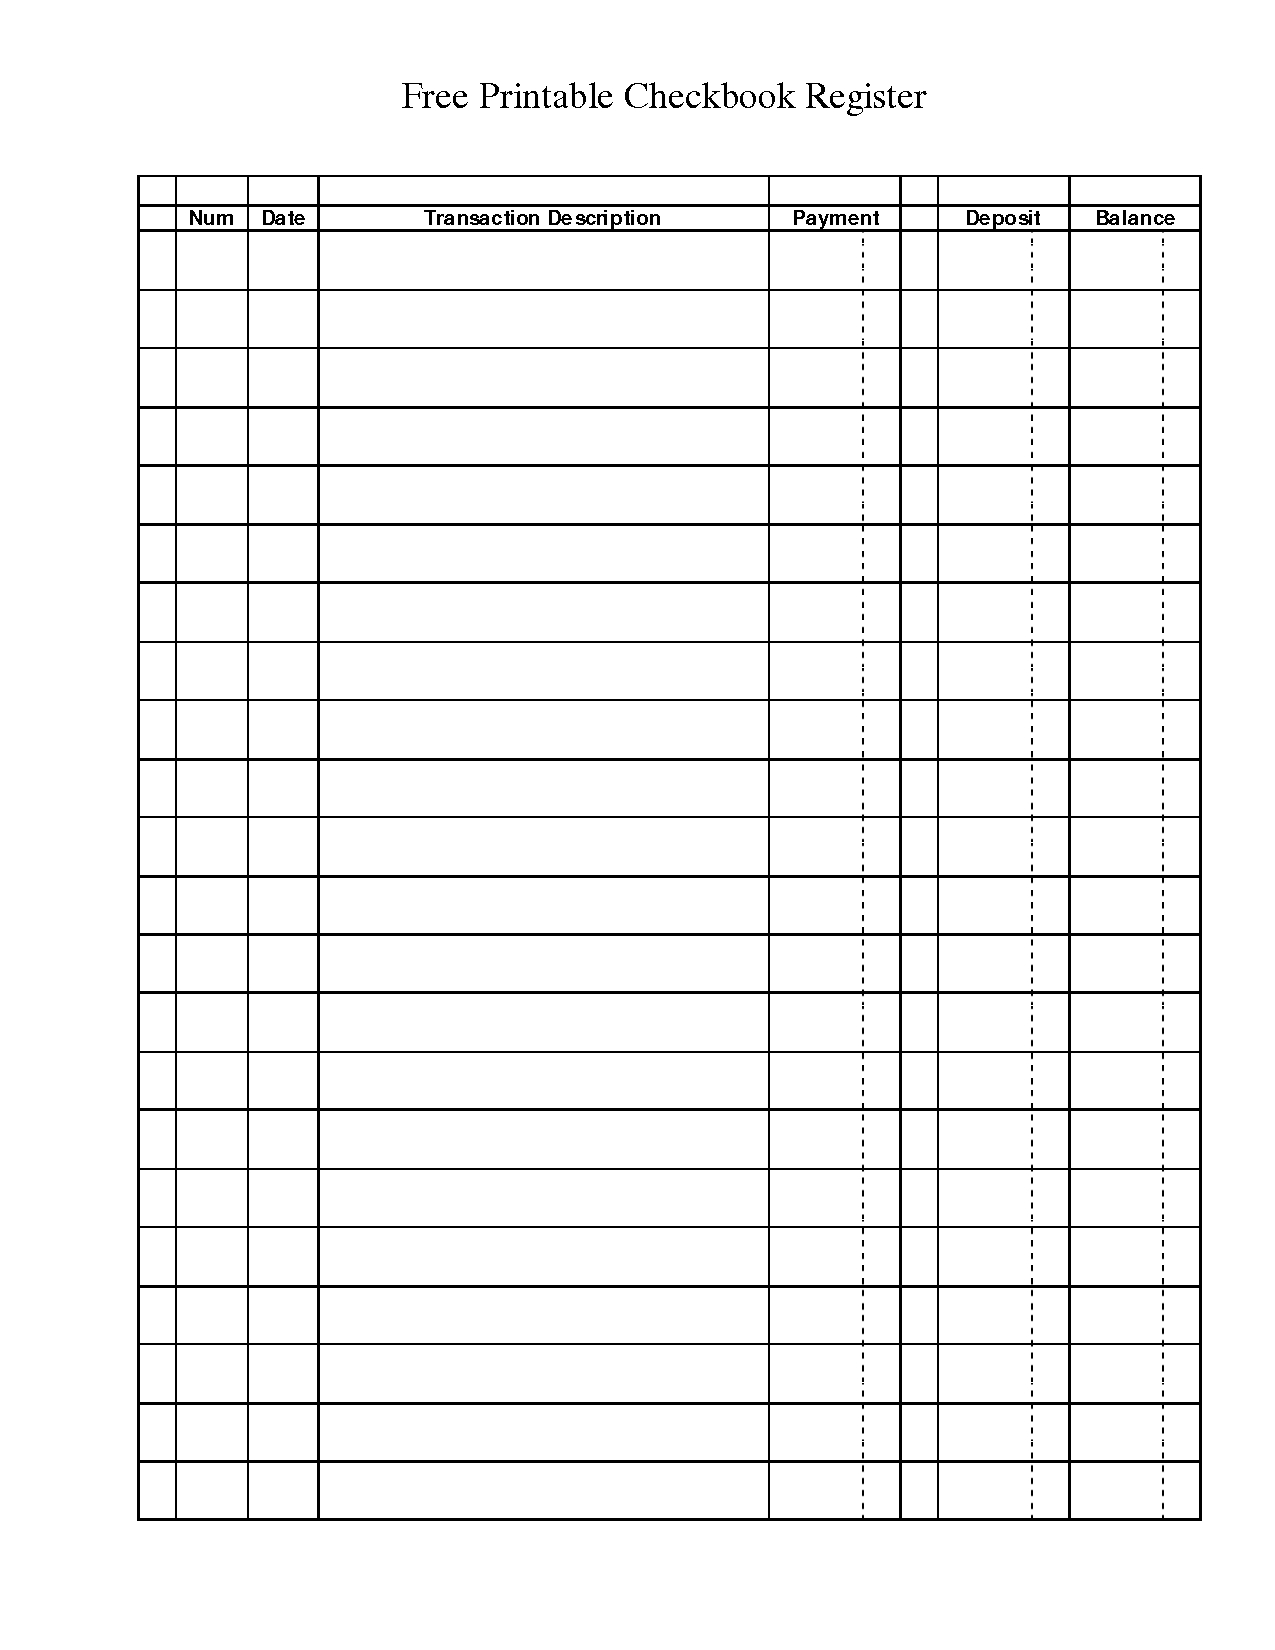 Free Printable Template Chores | Free Printable Check Register - Free Printable Blank Checks